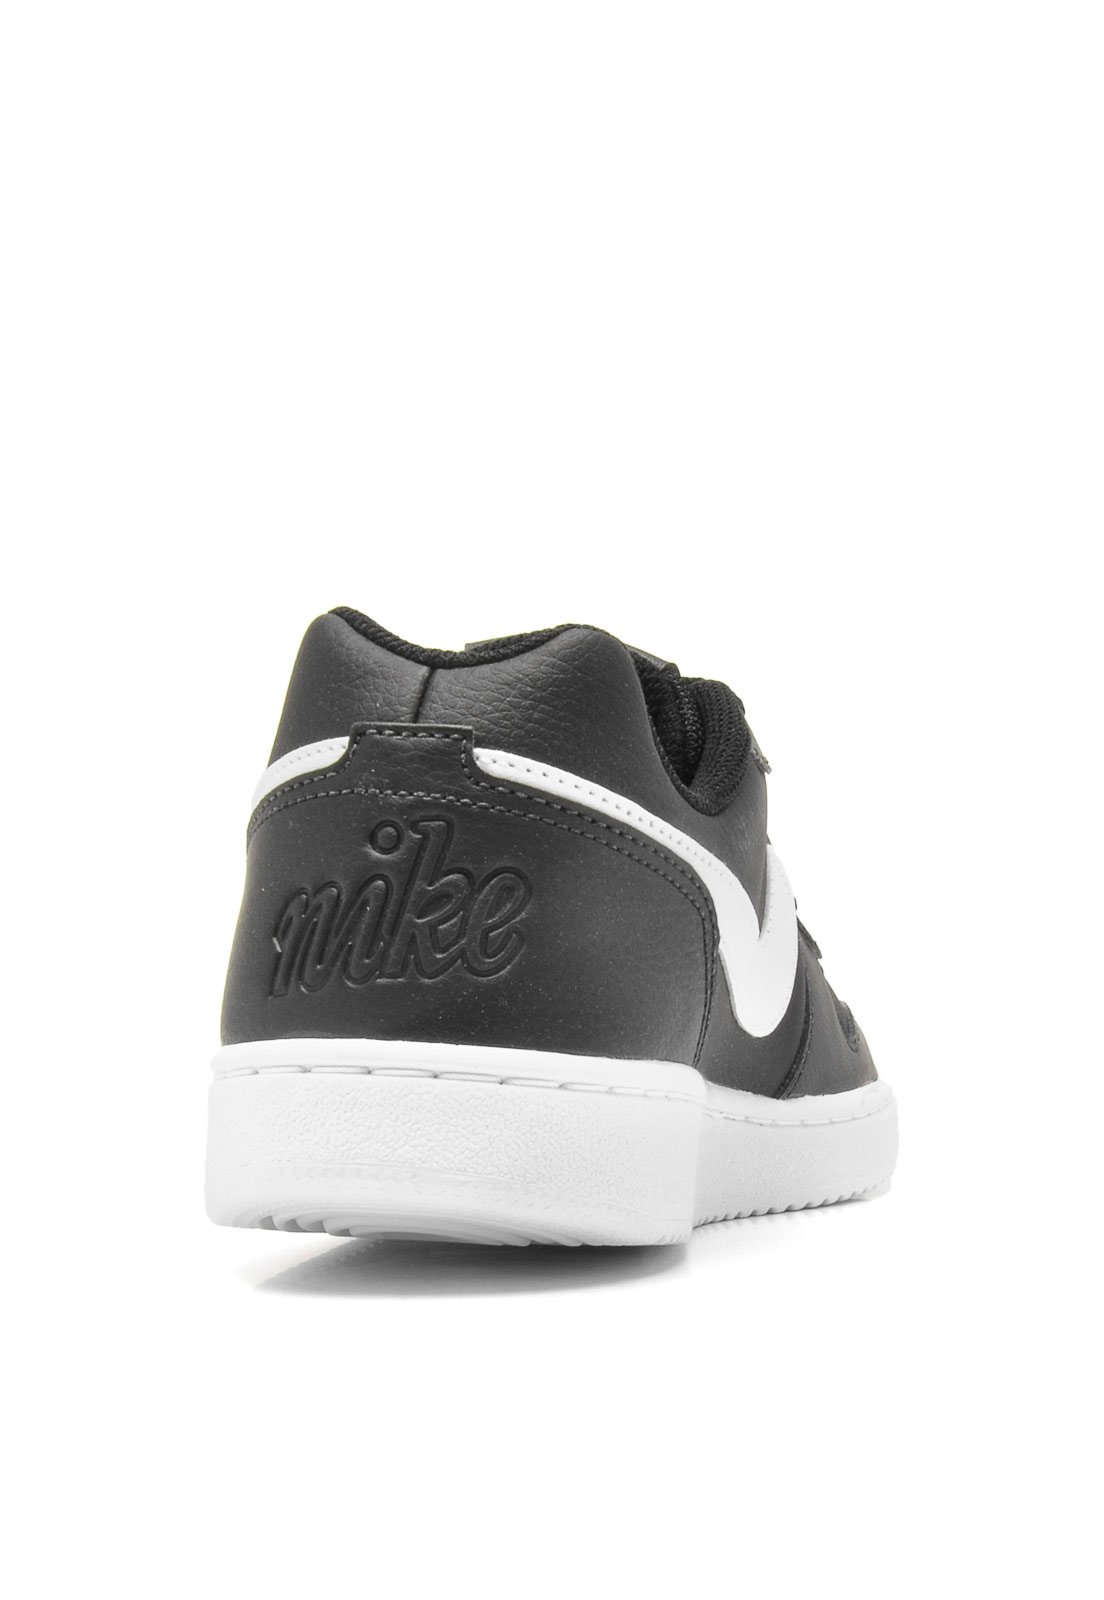 Tênis Nike Sportswear Ebernon Low Preto/Branco - Compre Agora | Dafiti